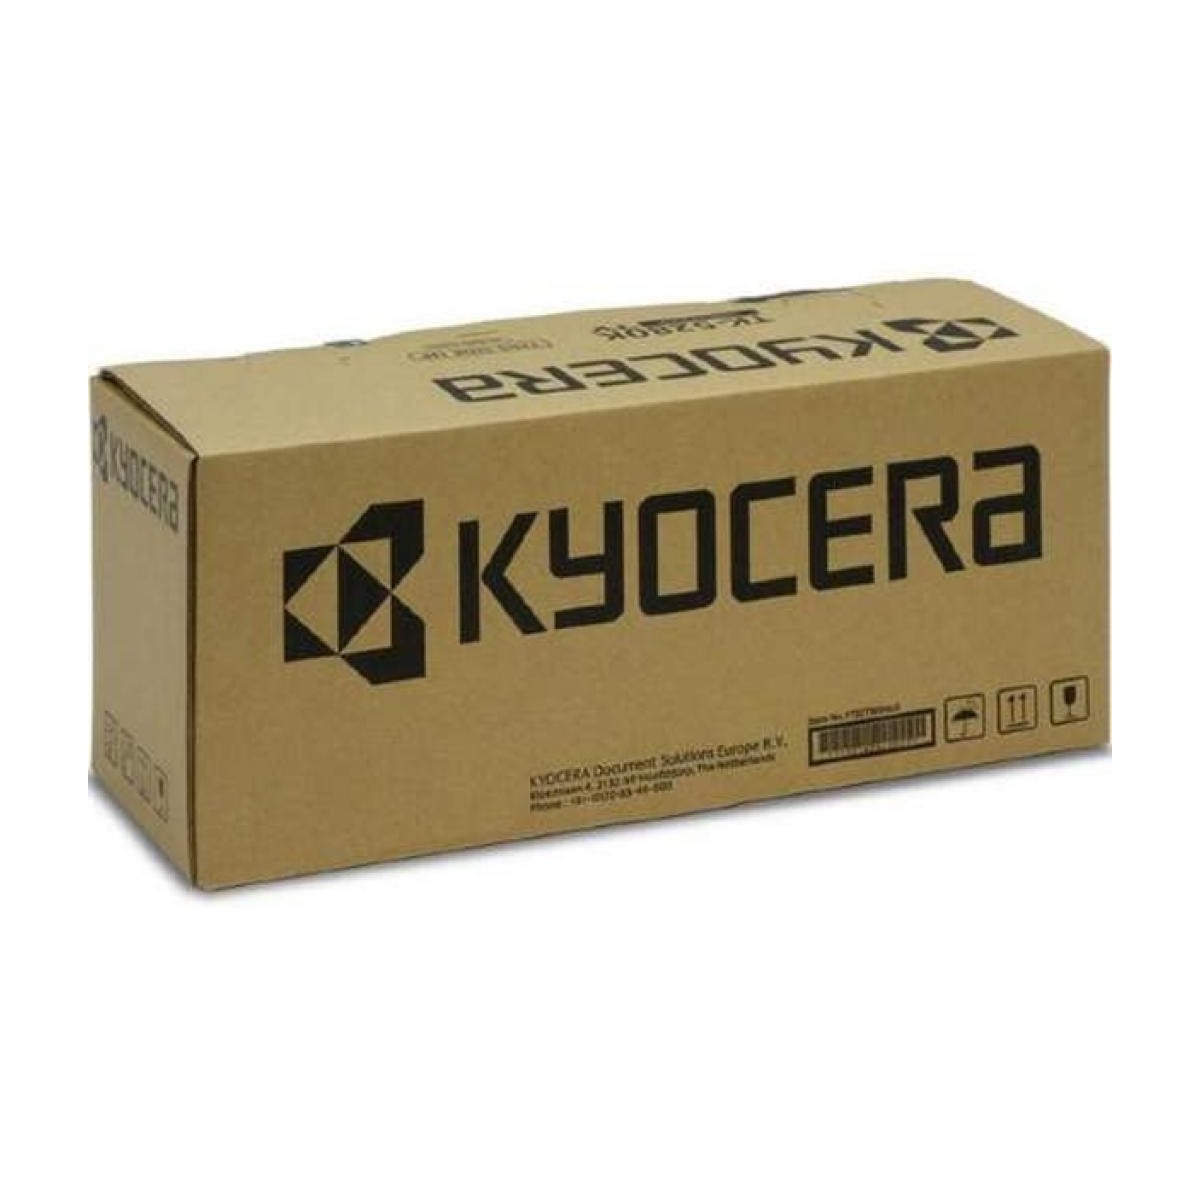 Kyocera DK-670 - Original - Kyocera - KM-2540/2560/TASKalfa 300i - 1 pc(s) - 300000 pages - Laser printing